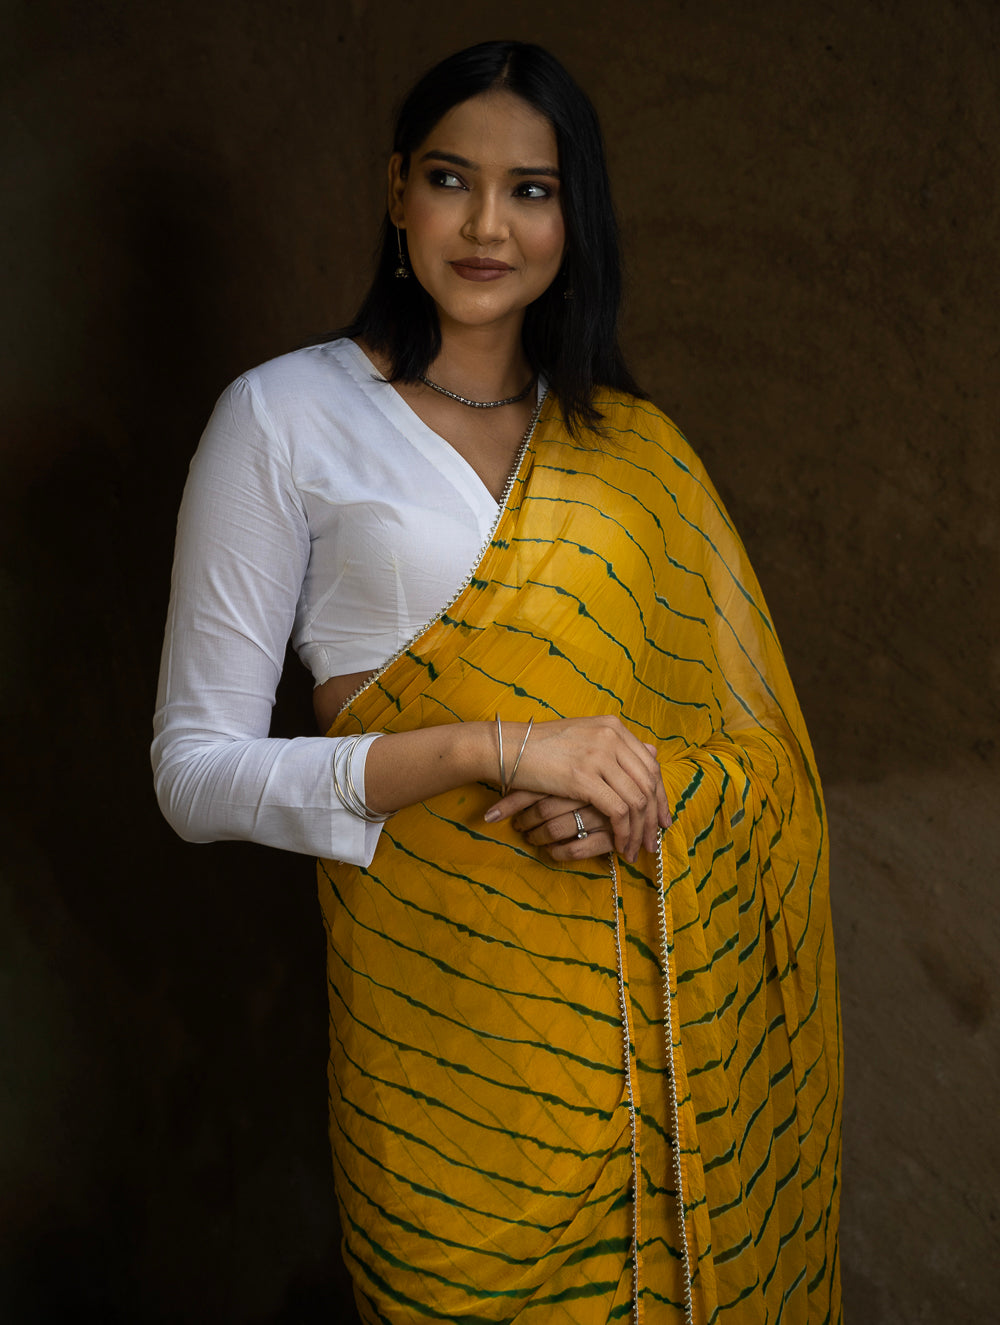 Load image into Gallery viewer, Striped Elegance. Lehariya Georgette Viscose Saree - Vibrant Yellow